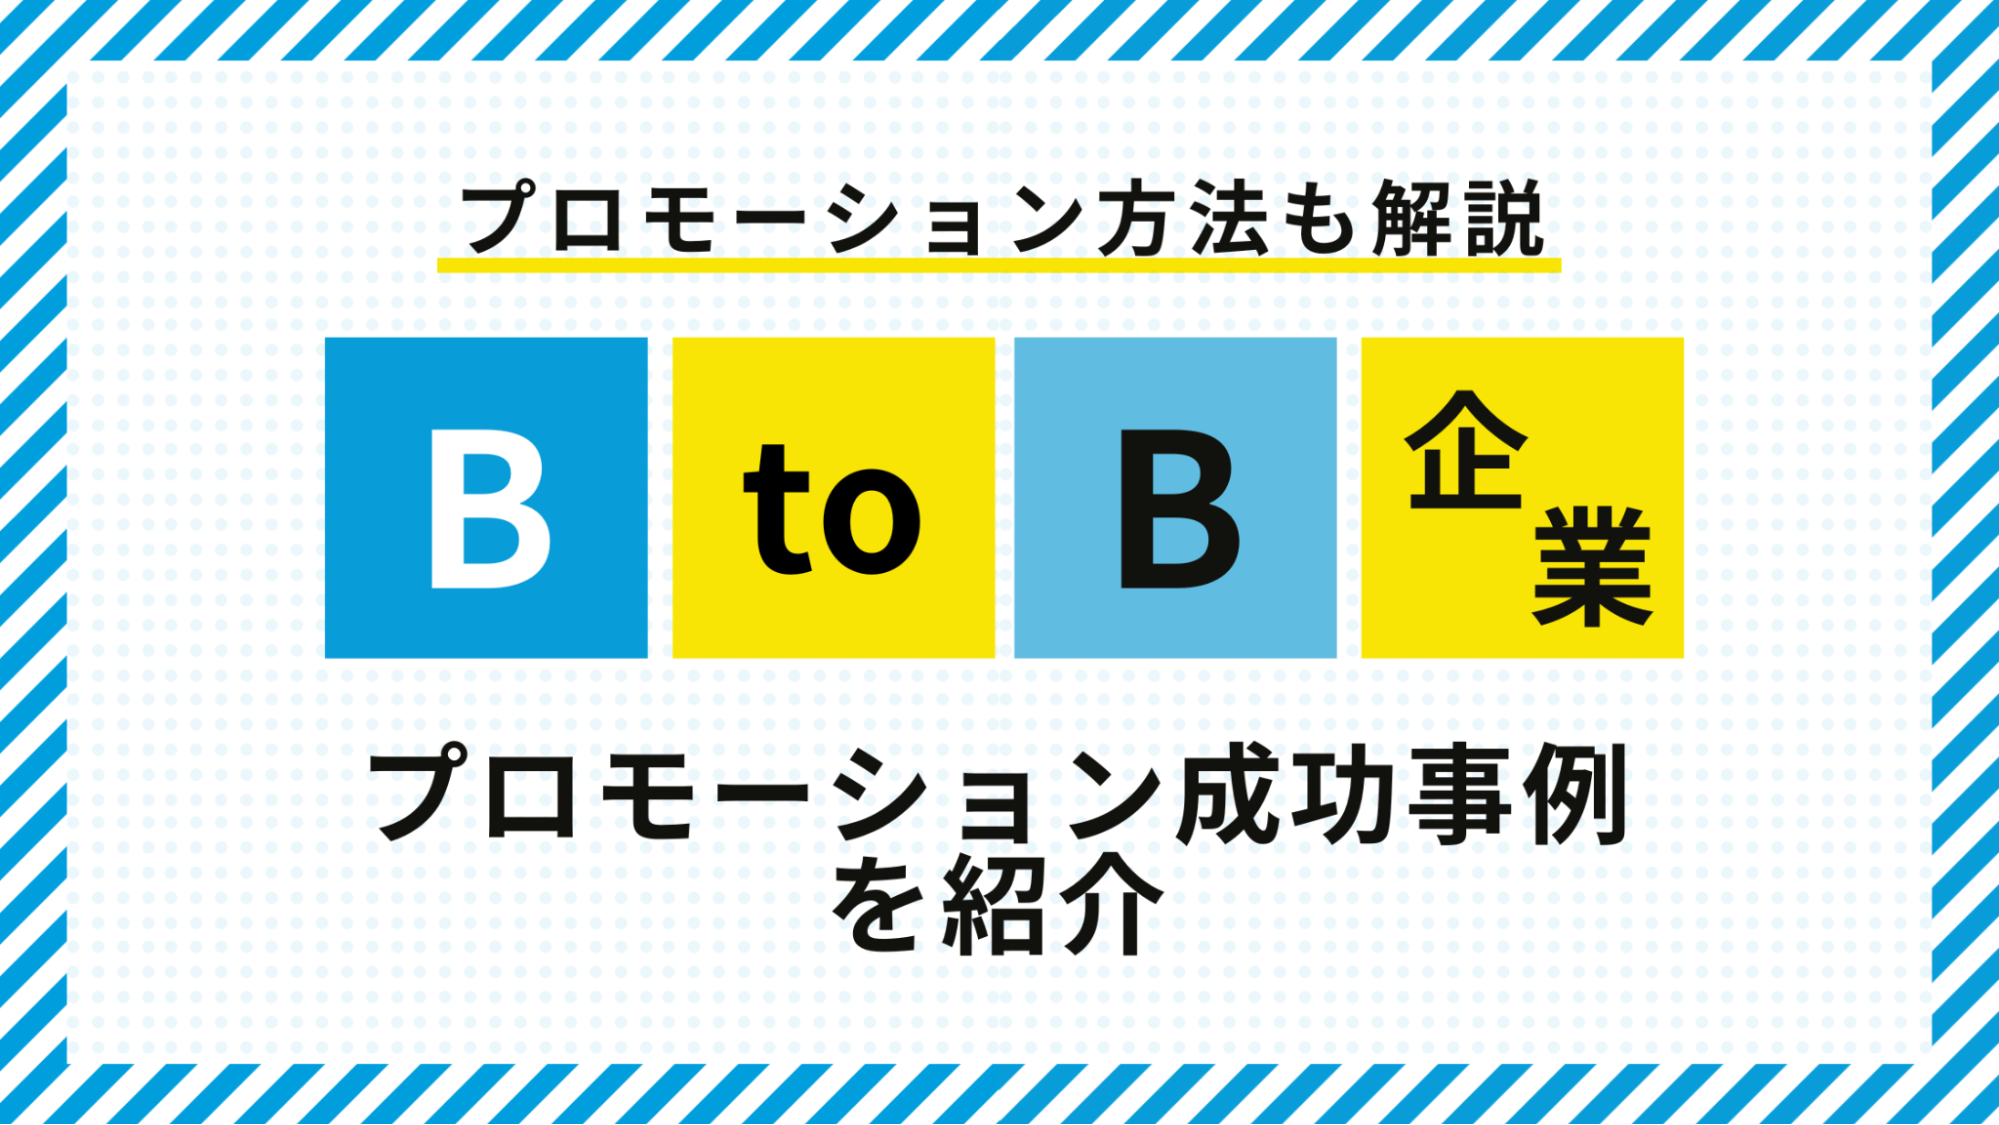 btobプロモーション事例 アイキャッチ